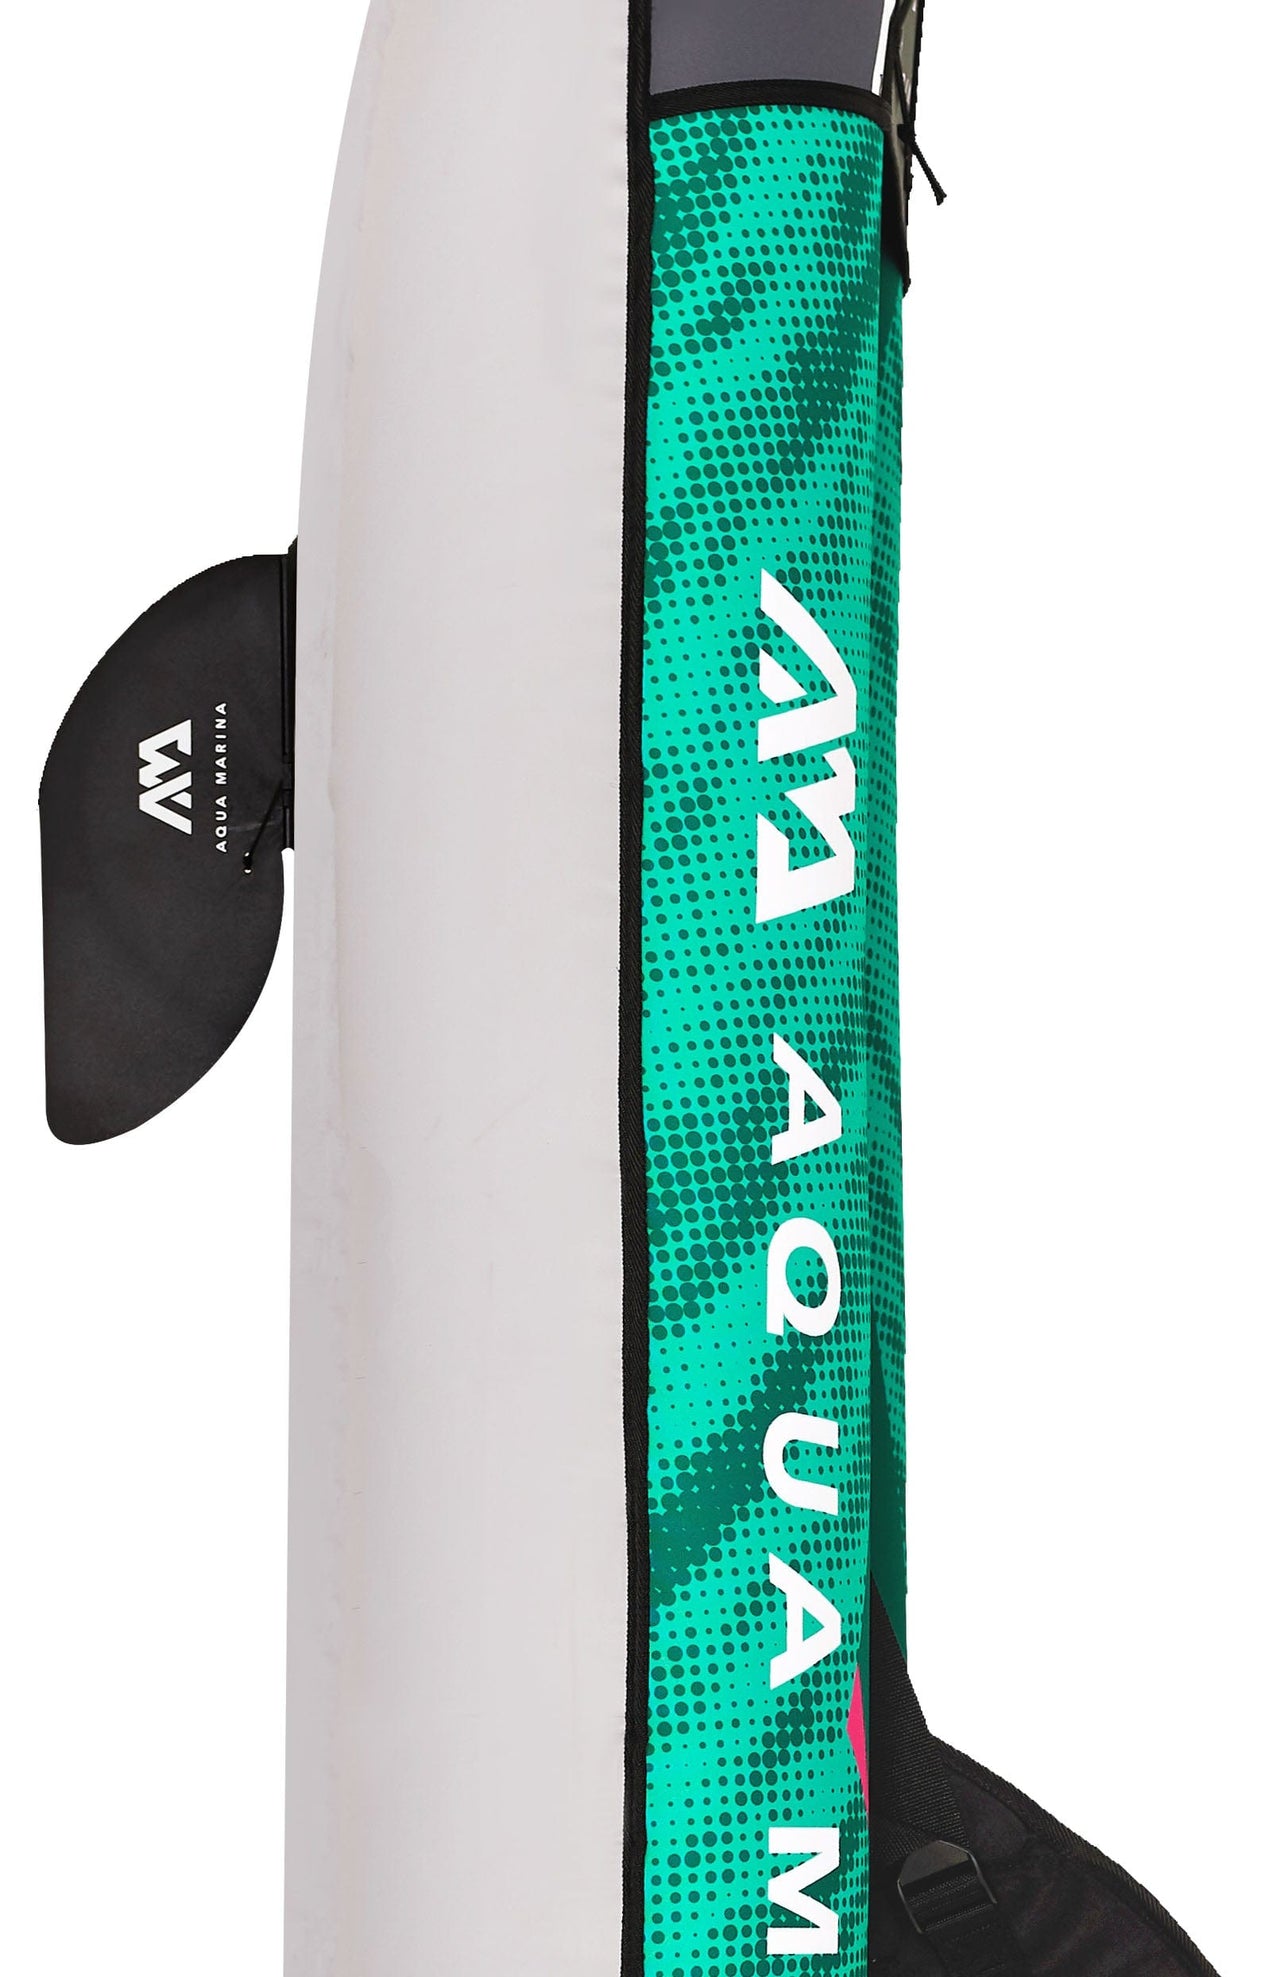 Aqua Marina 10’6″ LAXO-320 2022 2-Person Recreational Inflatable Kayak - Good Wave